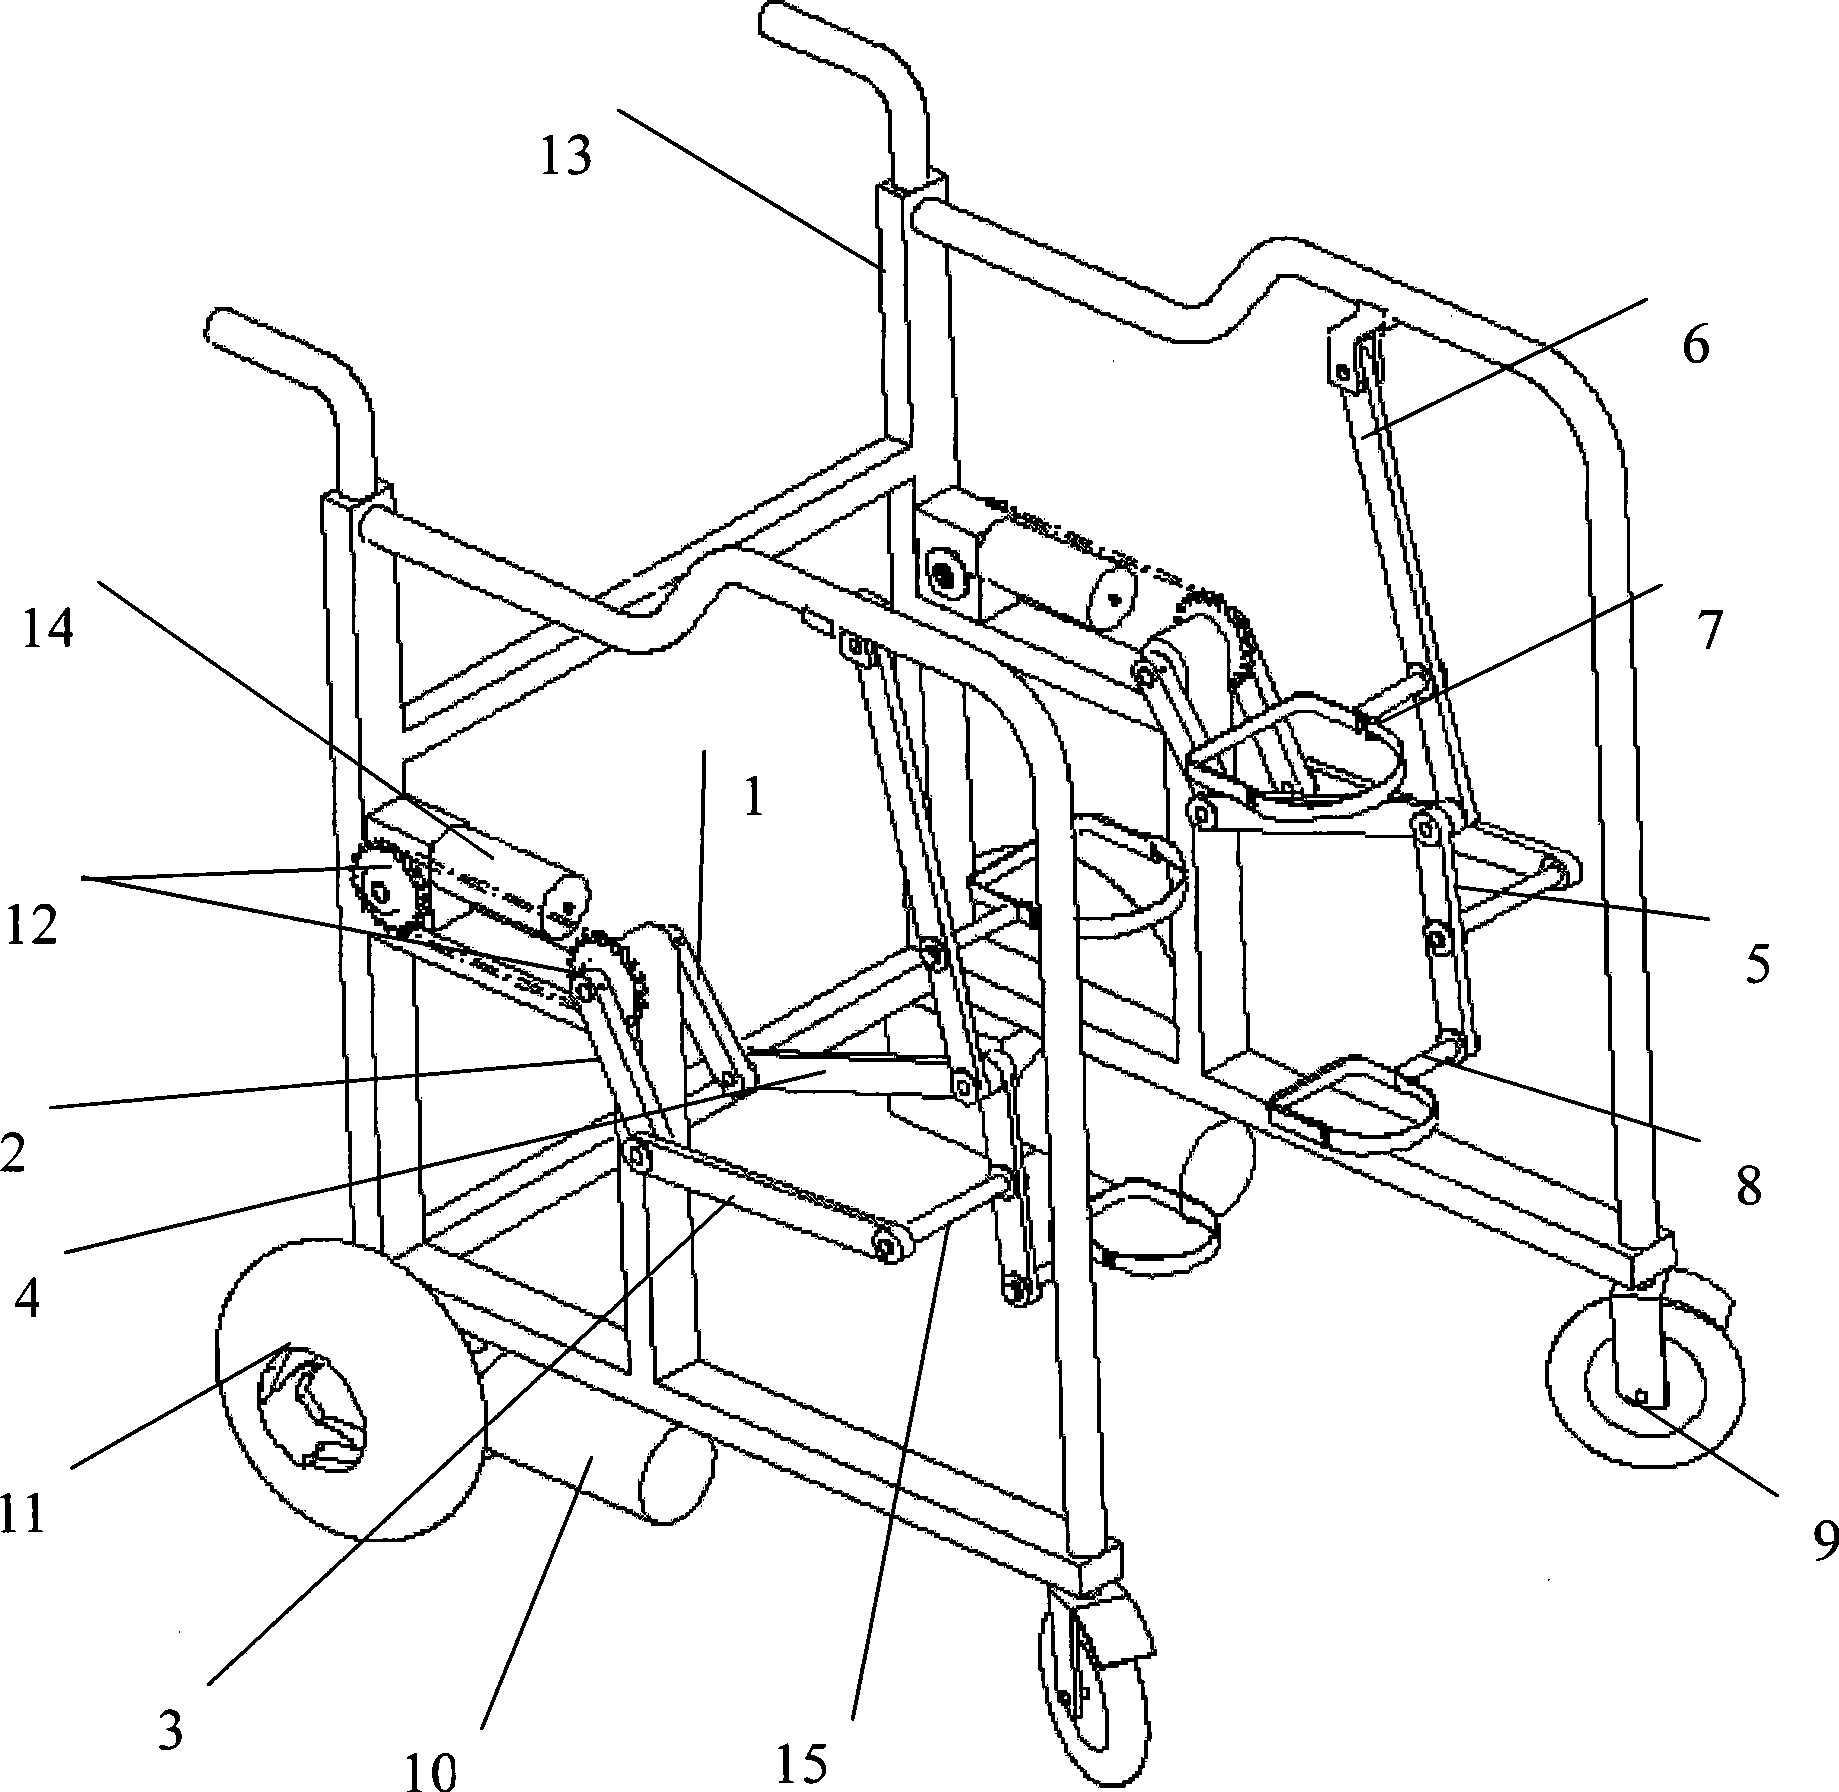 Six-lever apery gait power-assistant running mechanism